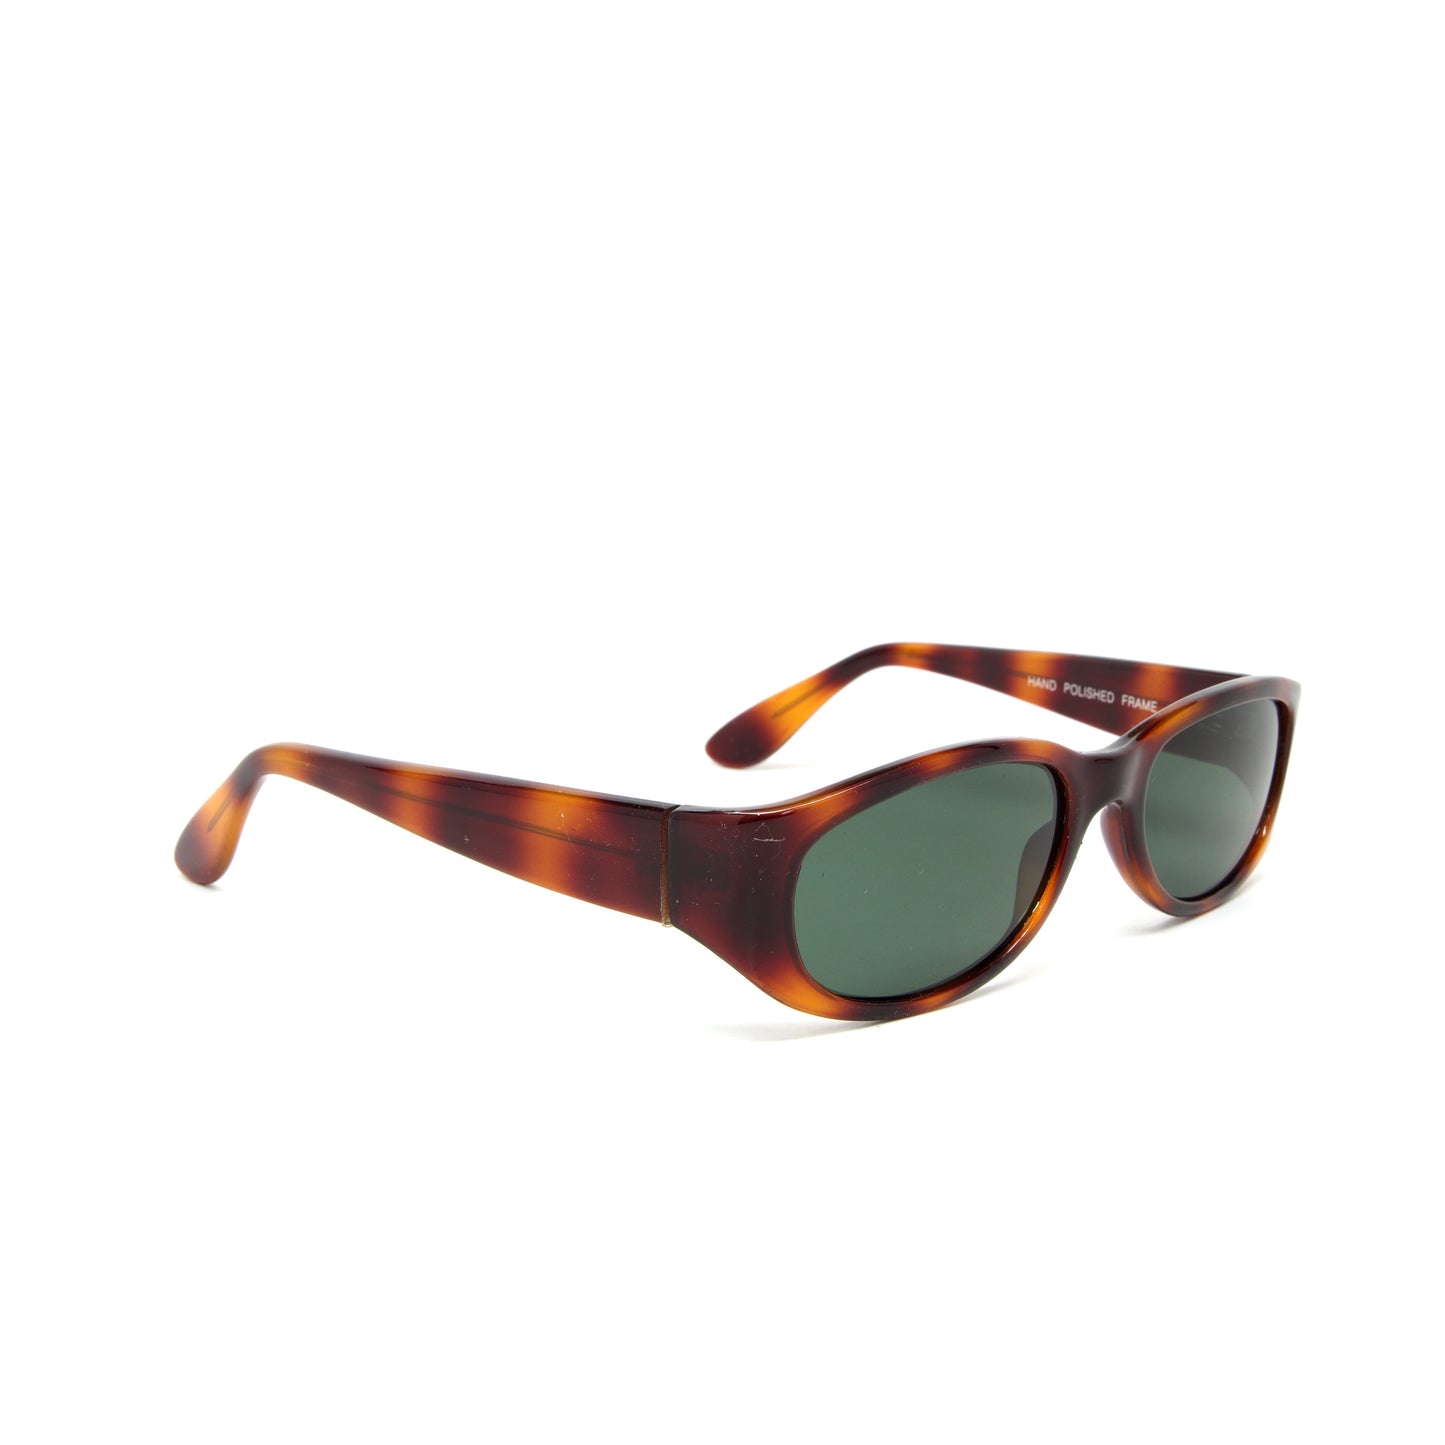 Vintage Small Size 90s Deadstock Mod Original Circular Sunglasses - Brown